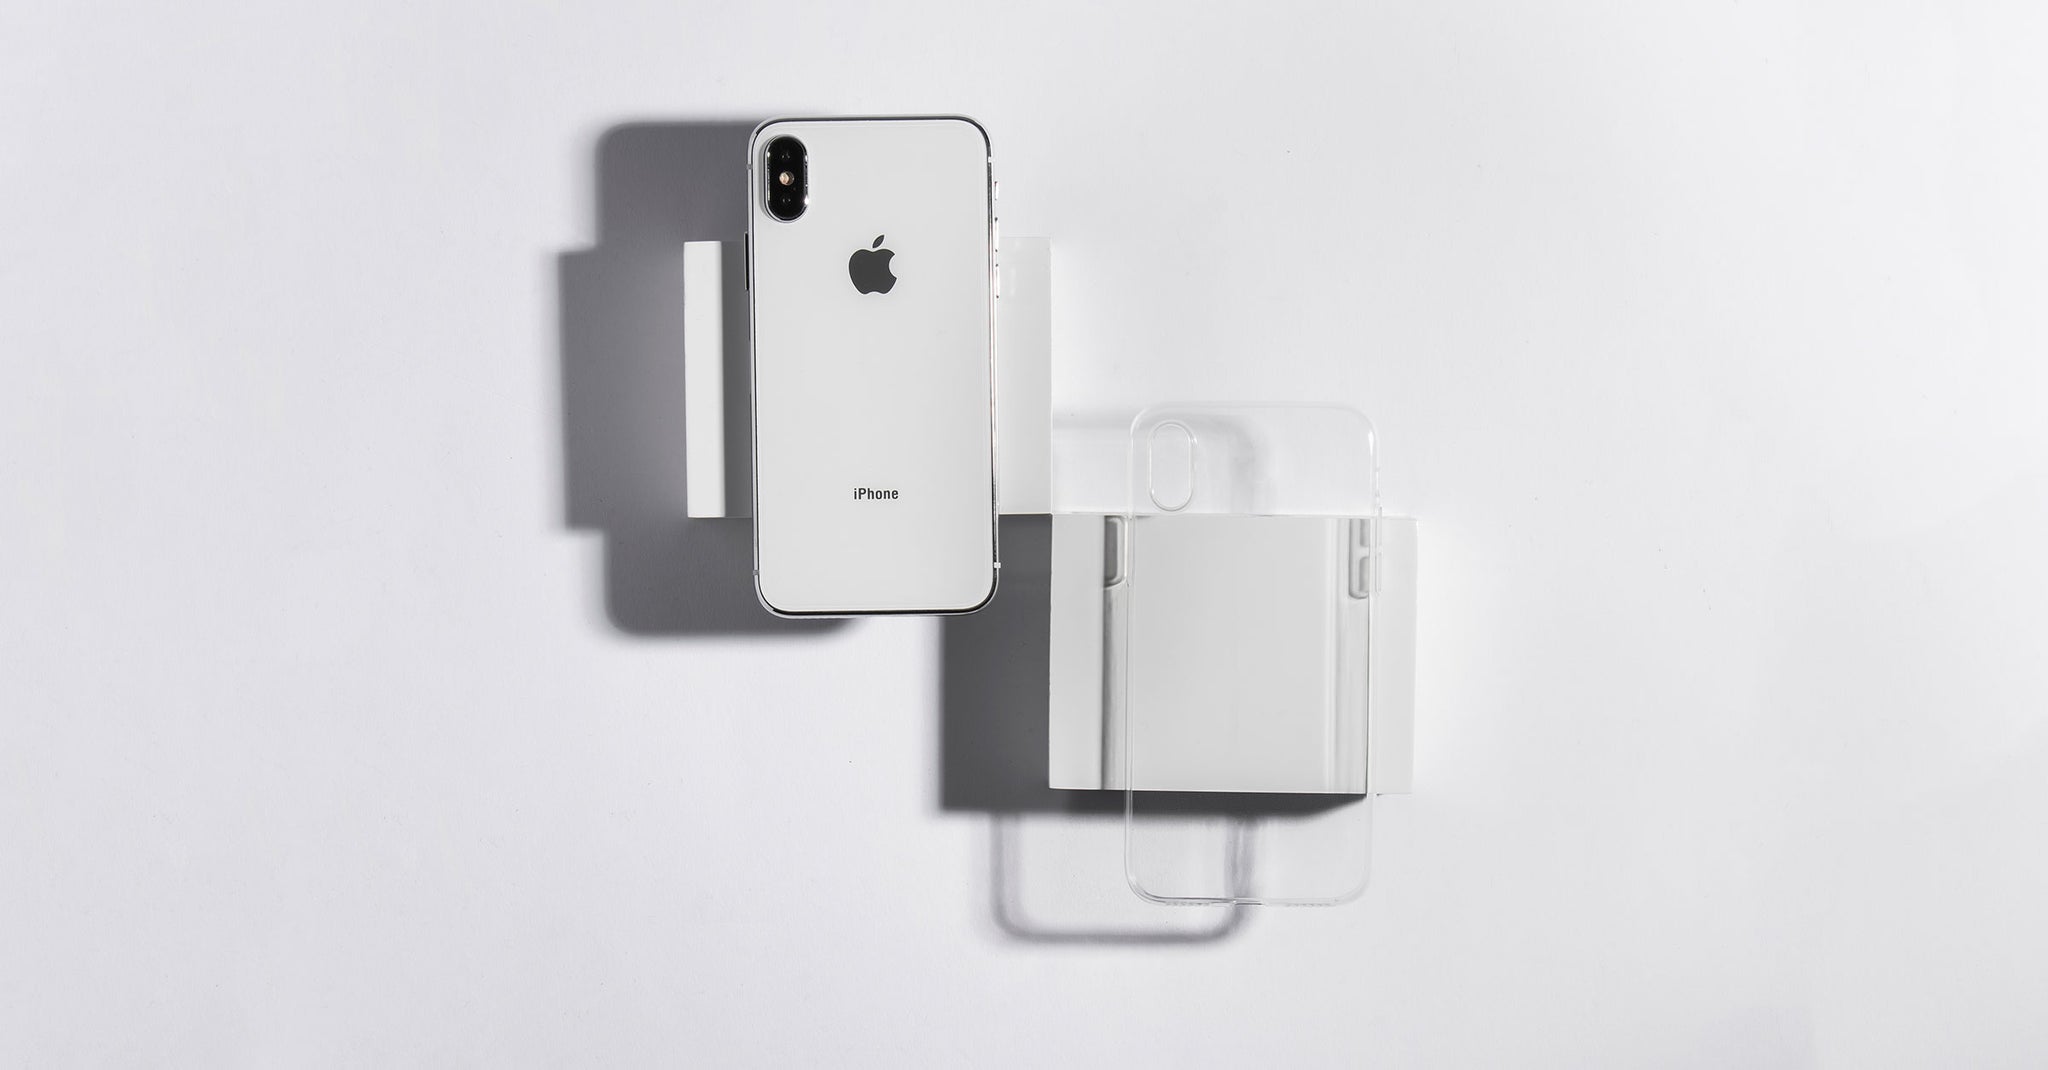 iPhone X case vs an XS case